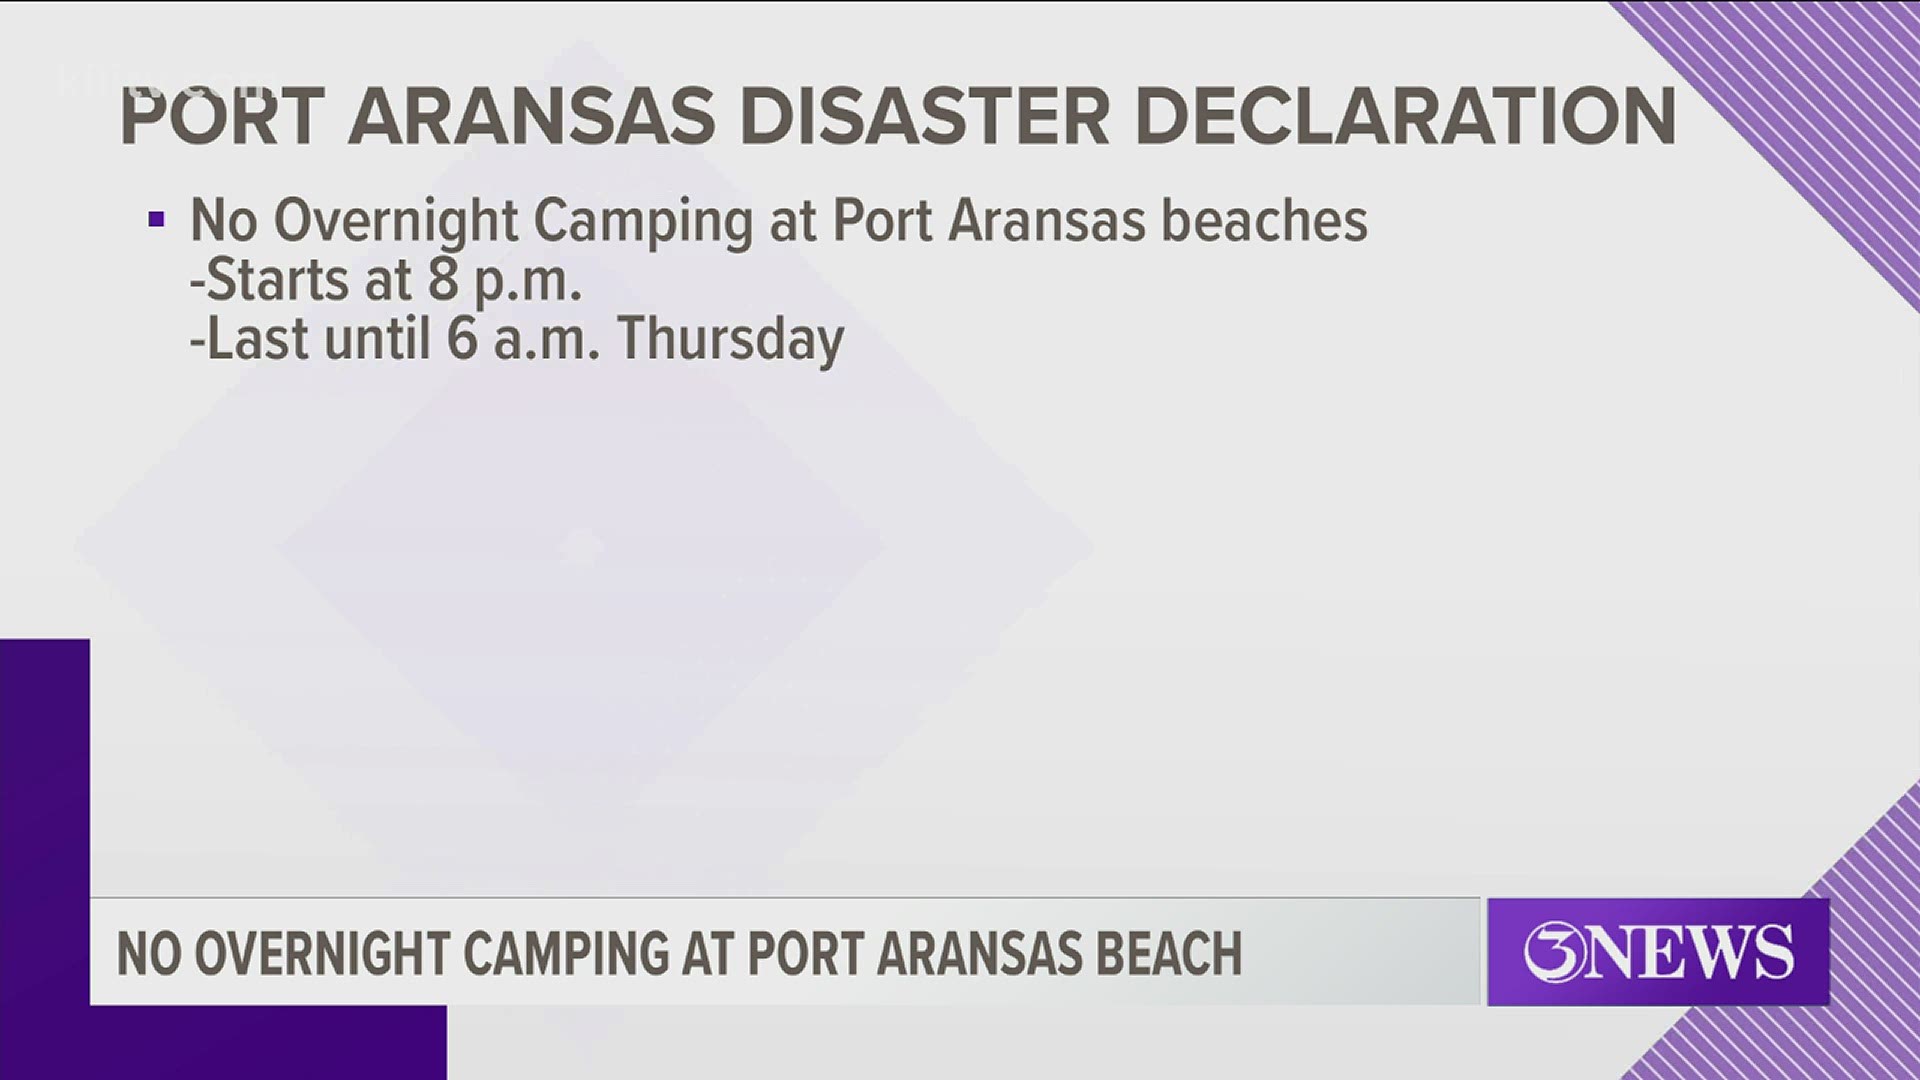 The declaration states Hurricane Zeta could impact coastal areas and the City of Port Aransas.